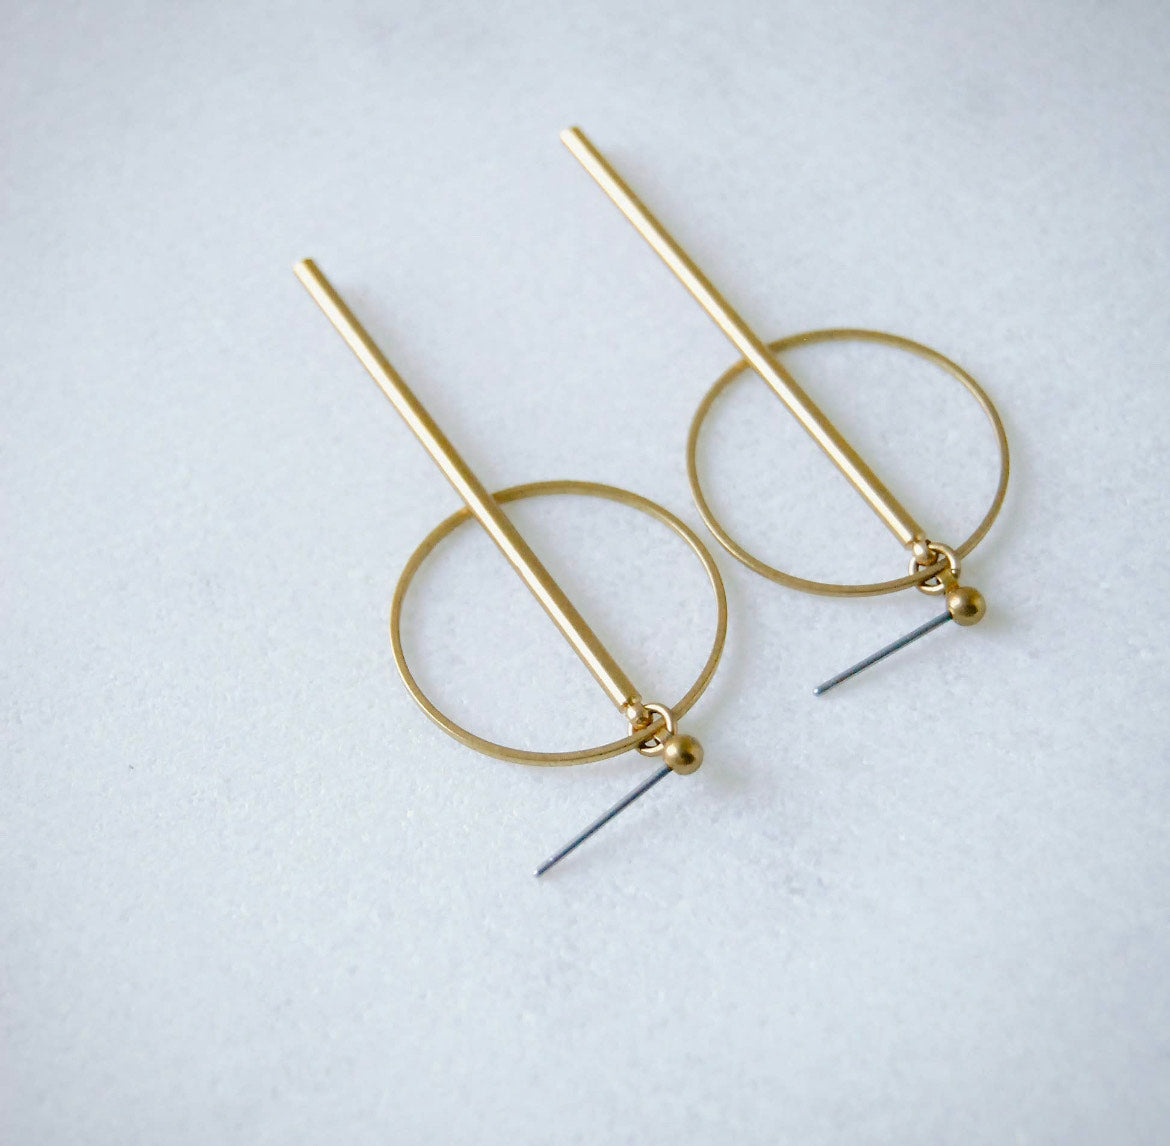 Circle and Bar Earrings | Simple and Minimal Stud Dangles